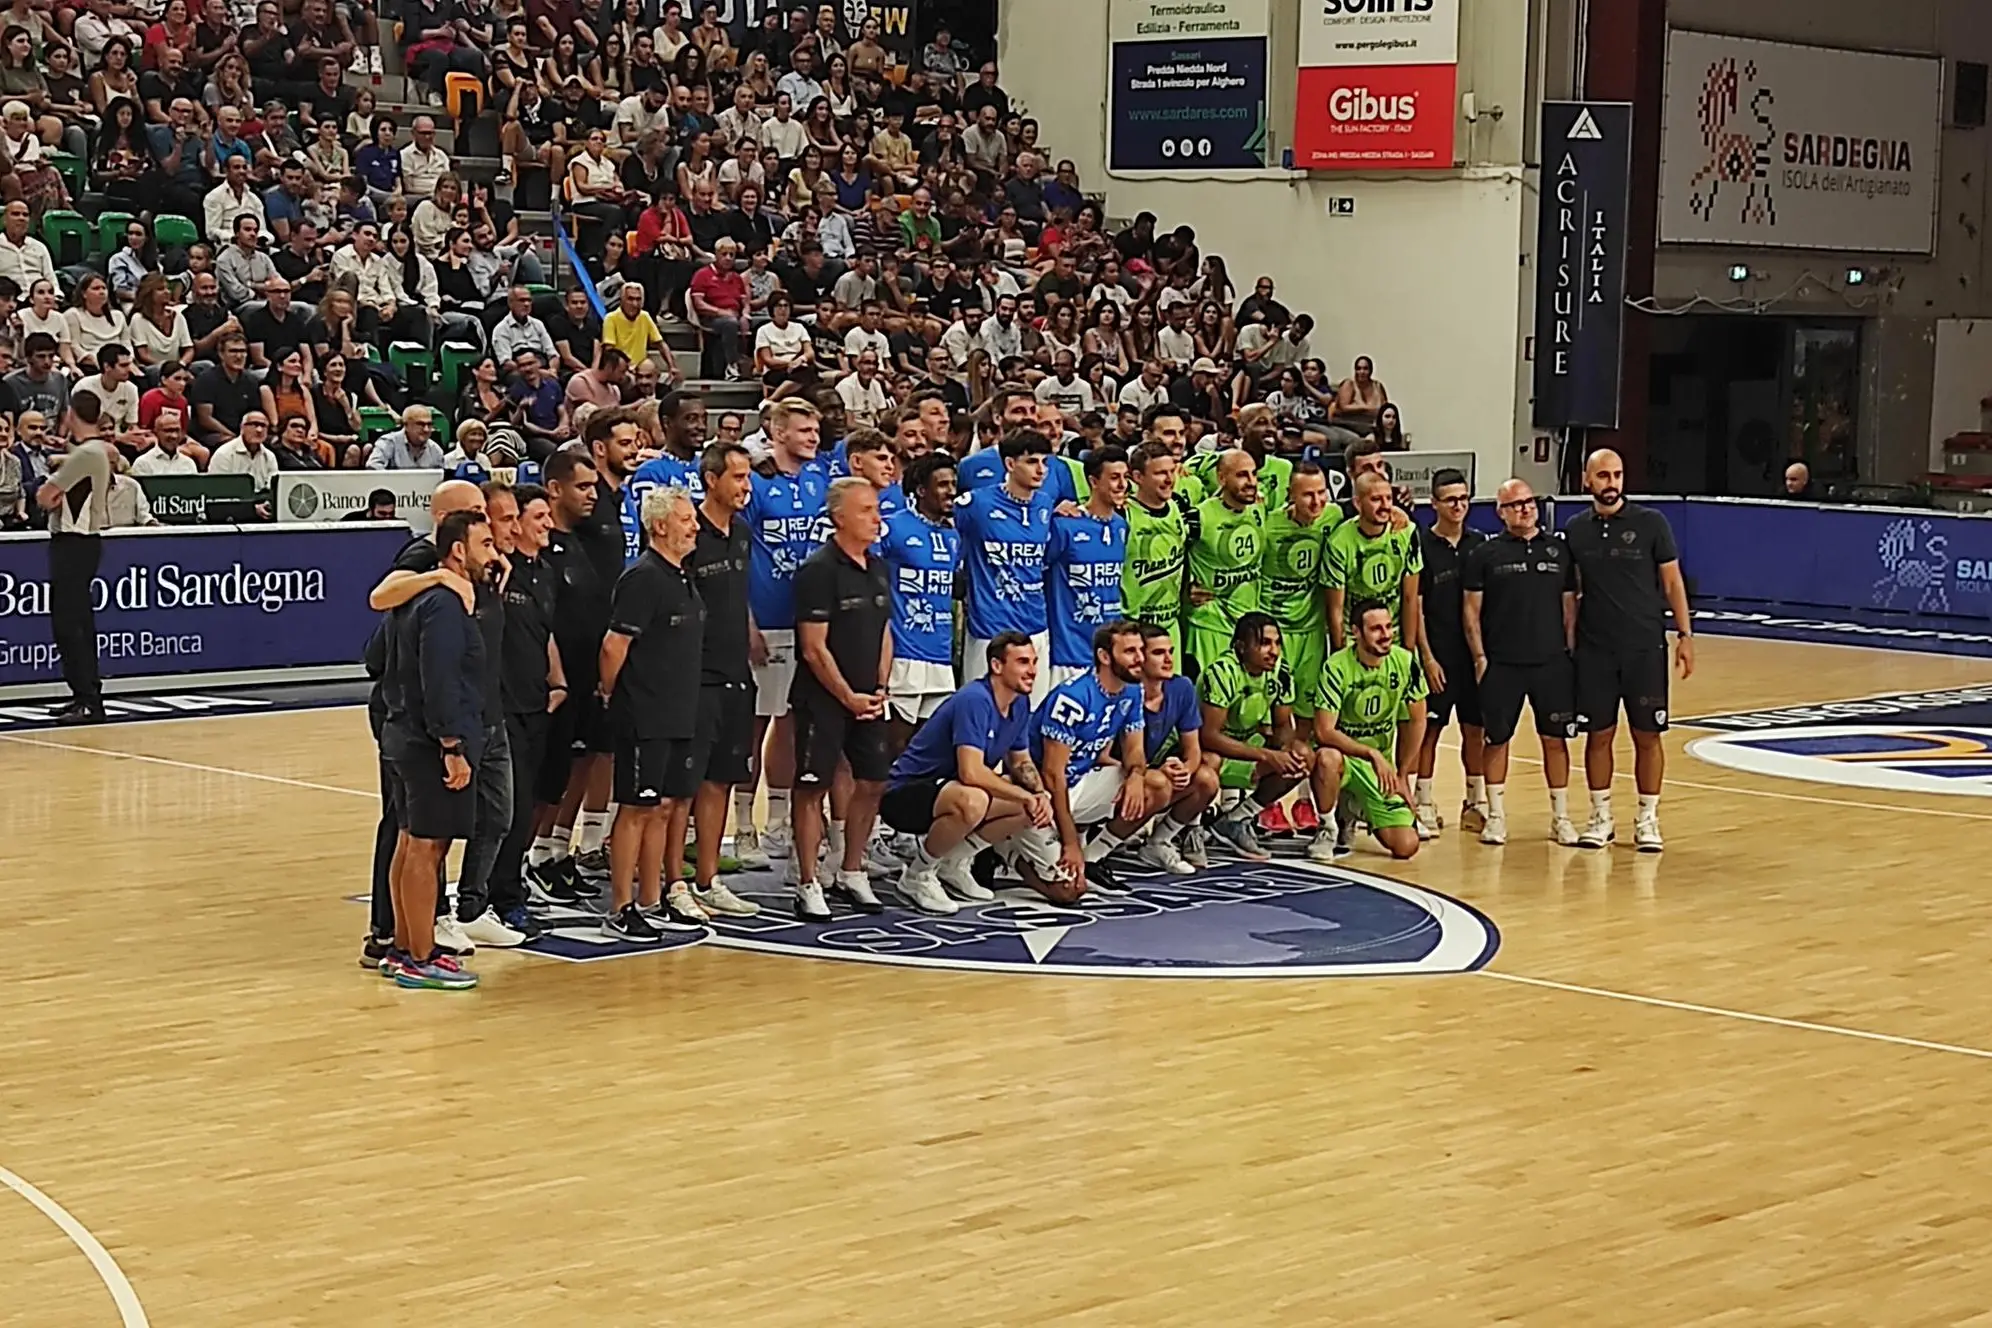 La Dinamo e il Team Jack insieme (foto G. Marras)